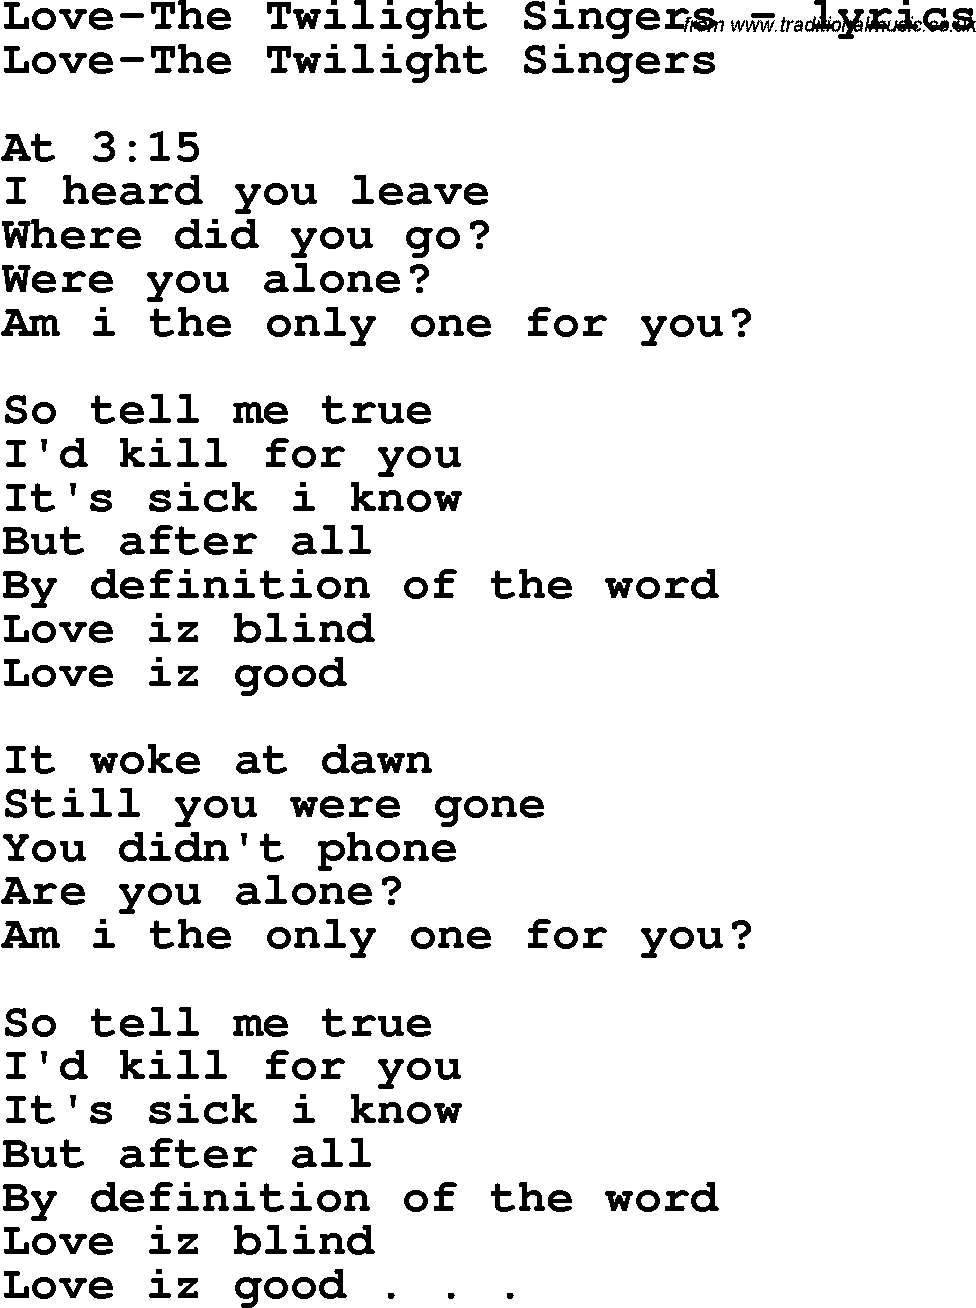 Love Song Lyrics for: Love-The Twilight Singers